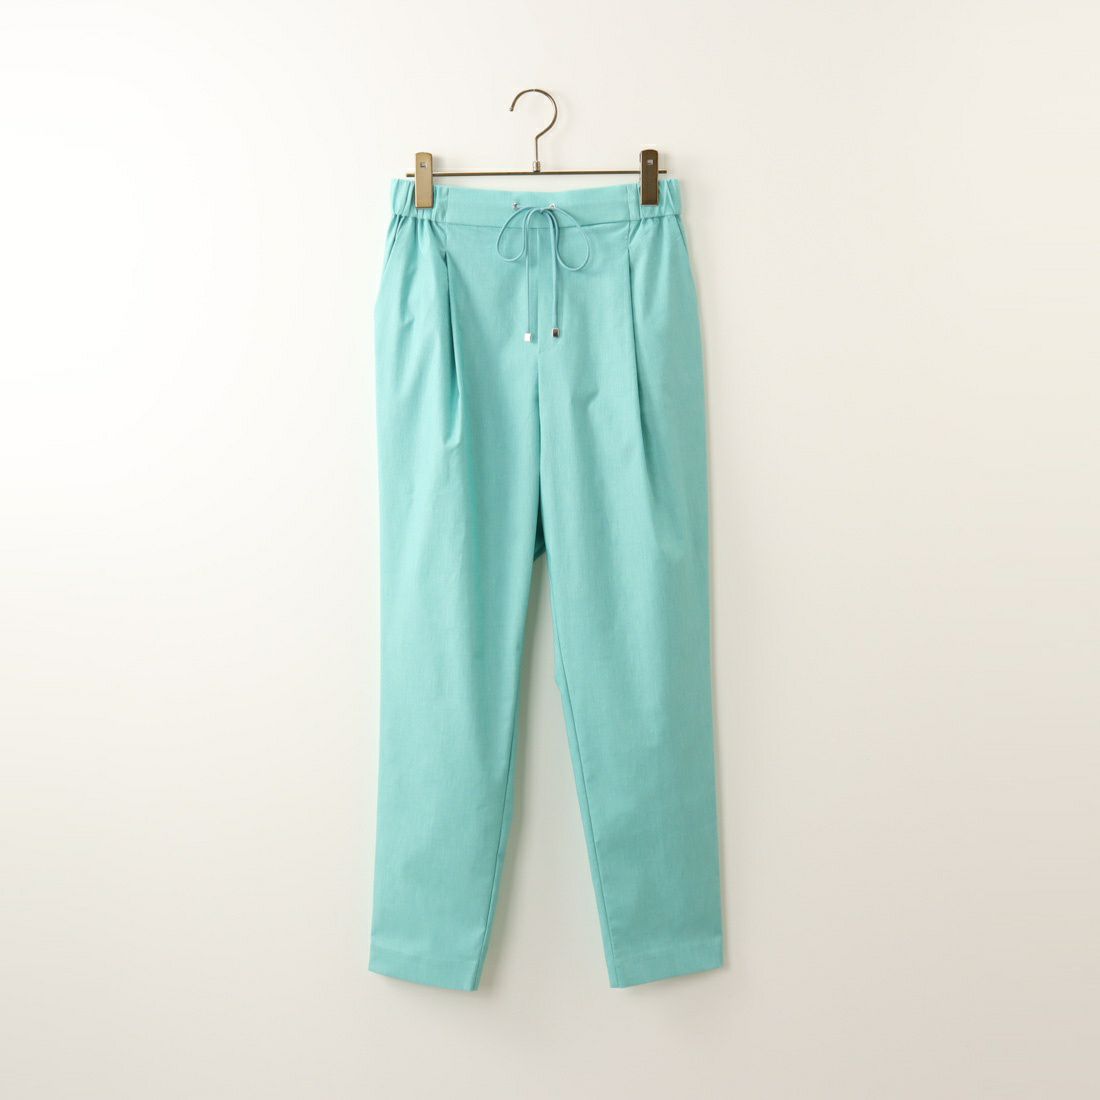 Jeans Factory Clothes [ジーンズファクトリークローズ] バックラッシュリネンプラススティックパンツ [218052] 60 ﾐﾝﾄｸﾞﾘｰ